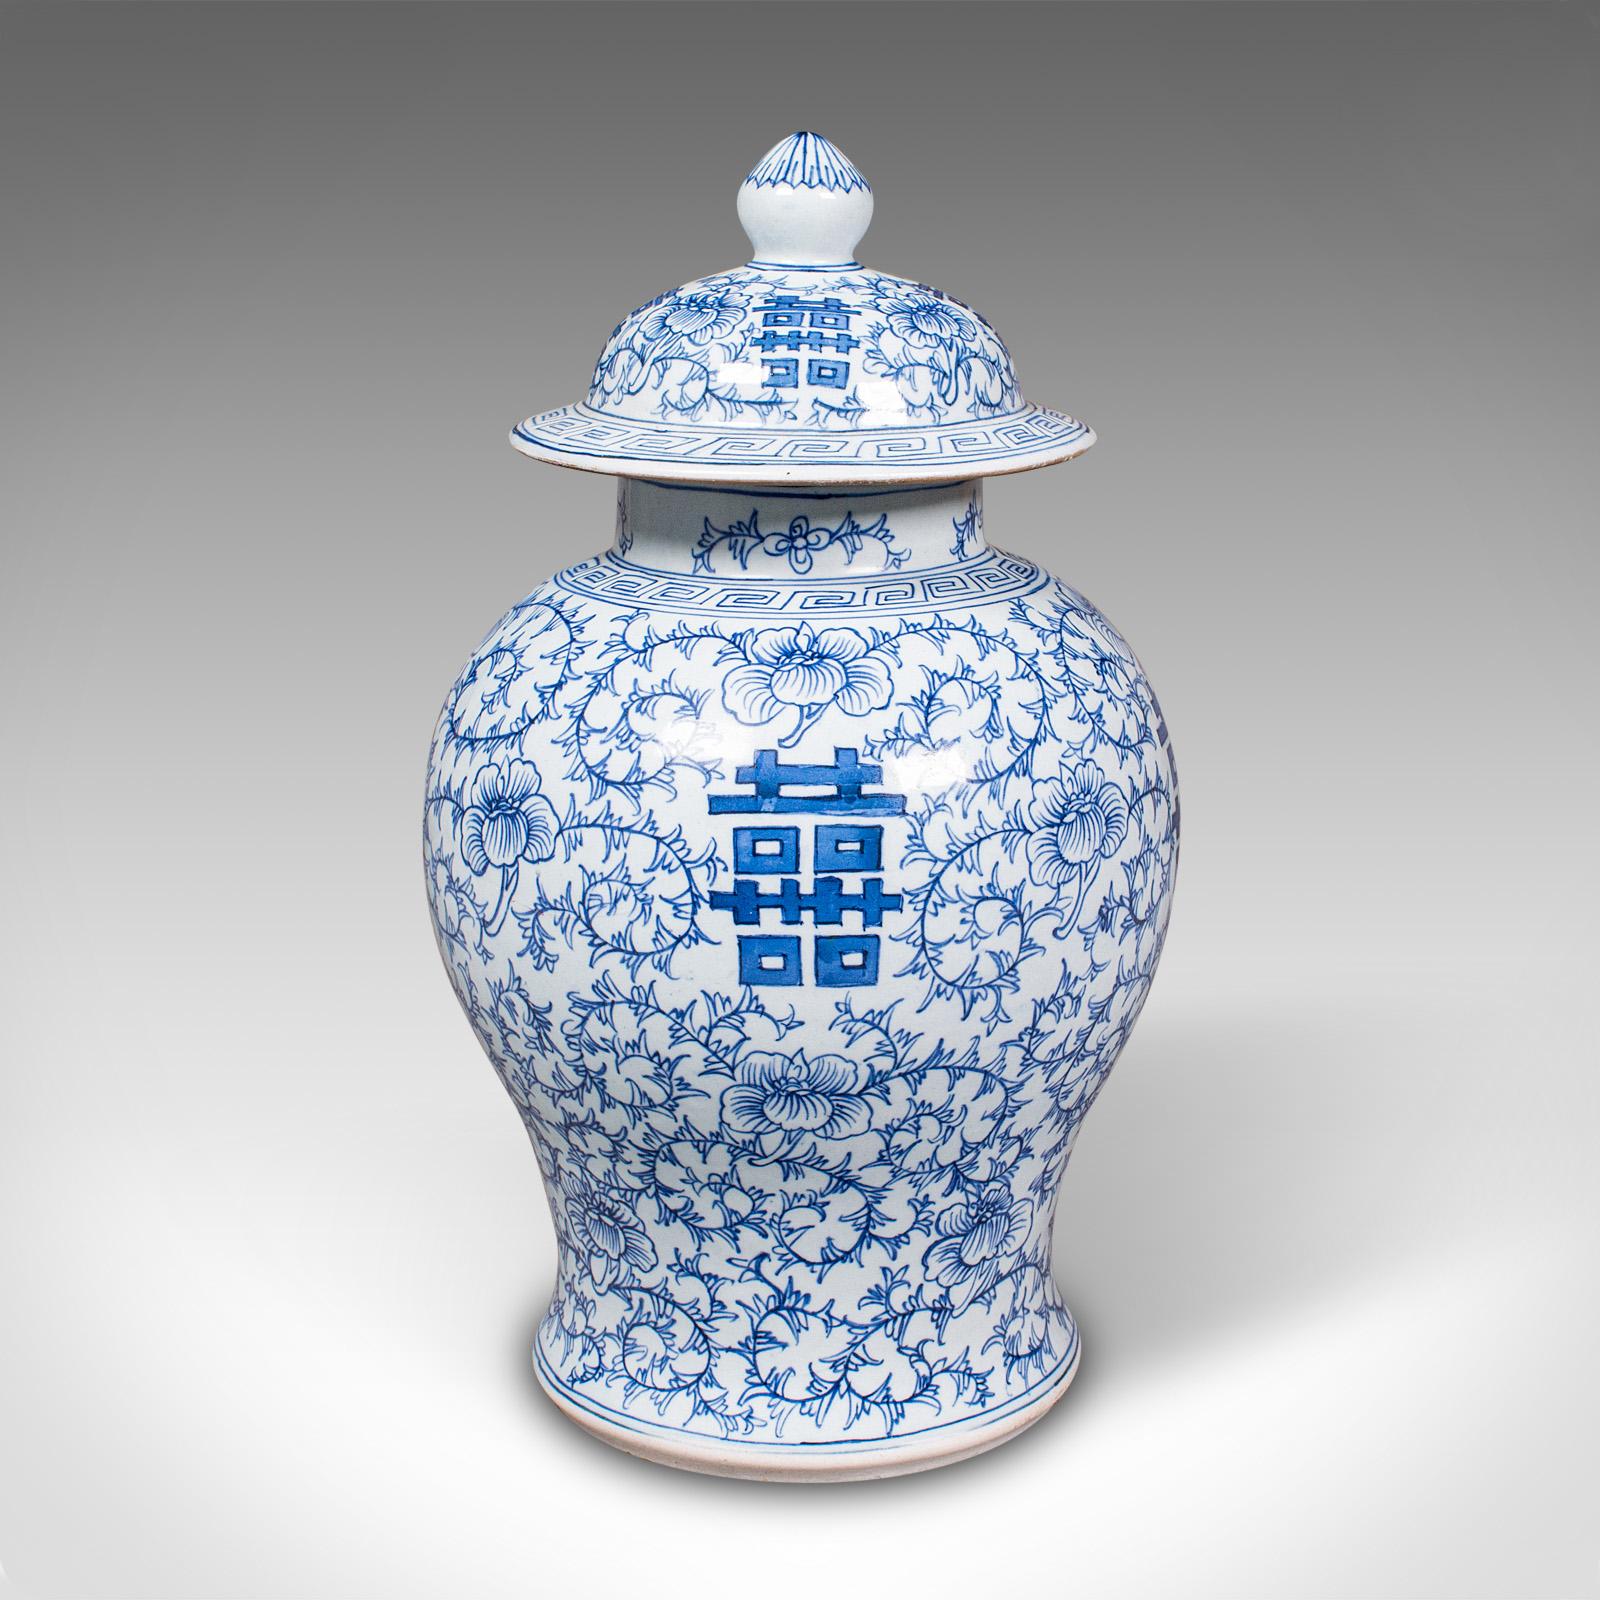 20th Century Vintage Decorative Flower Vase, Chinese, Ceramic, Urn, Spice Jar, Art Deco, 1930 For Sale